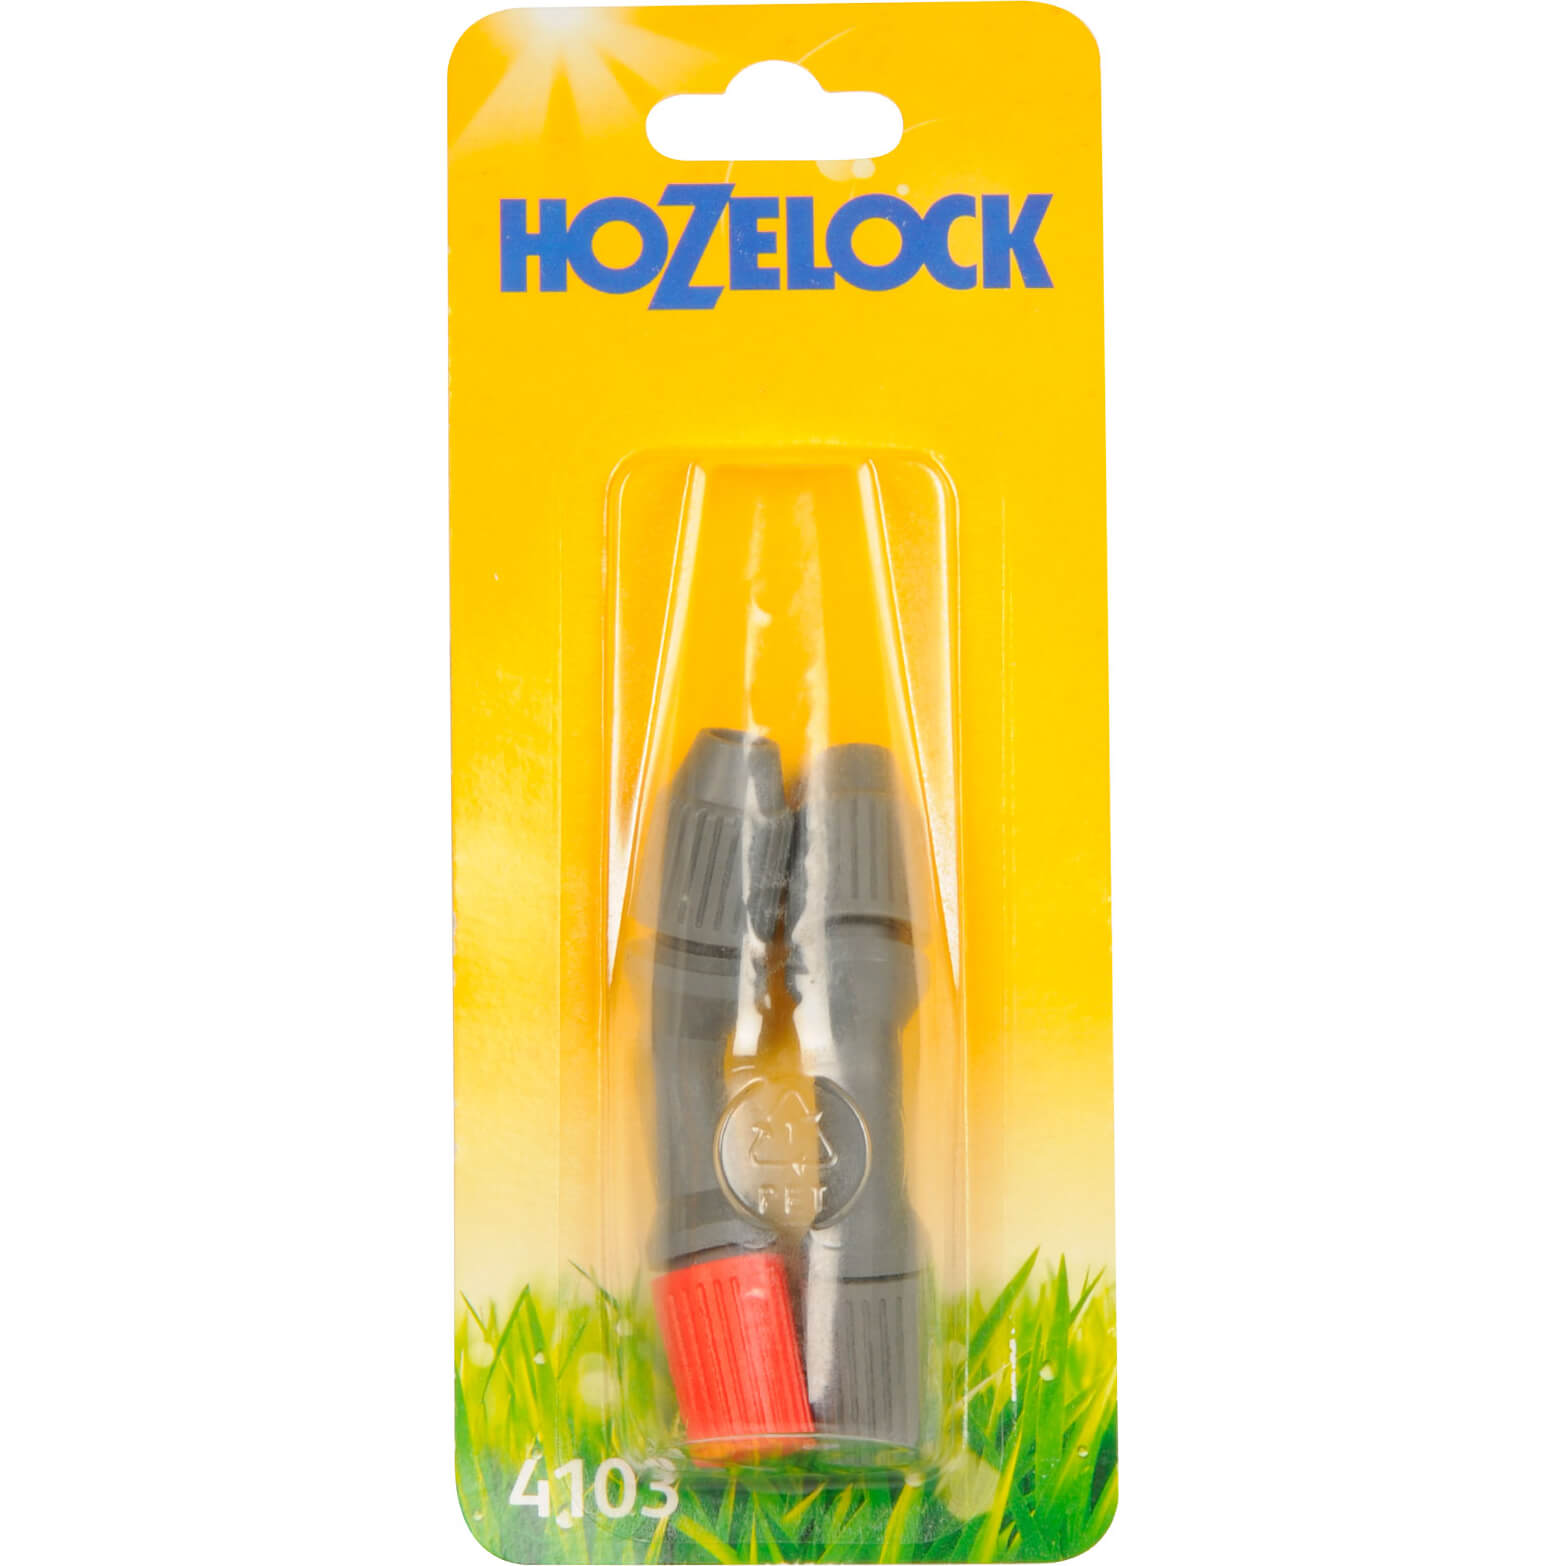 Hozelock Spray Nozzle Set for Standard and Plus Pressure Sprayers